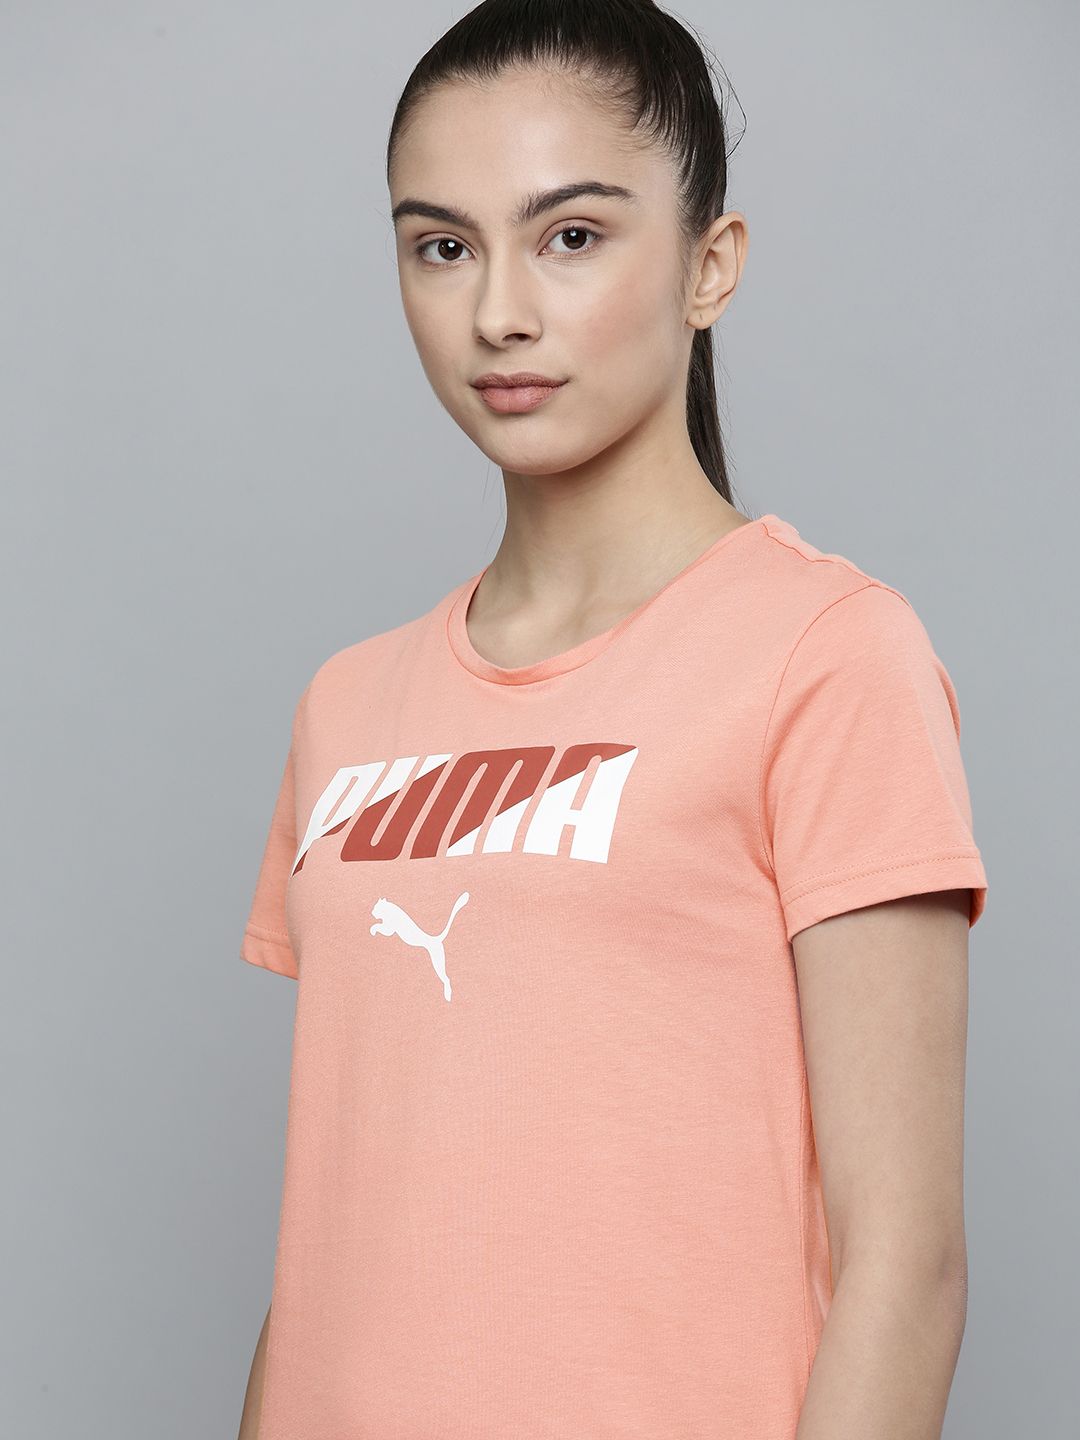 Puma Women Pink Brand Logo Printed Pure Cotton T-shirt Price in India